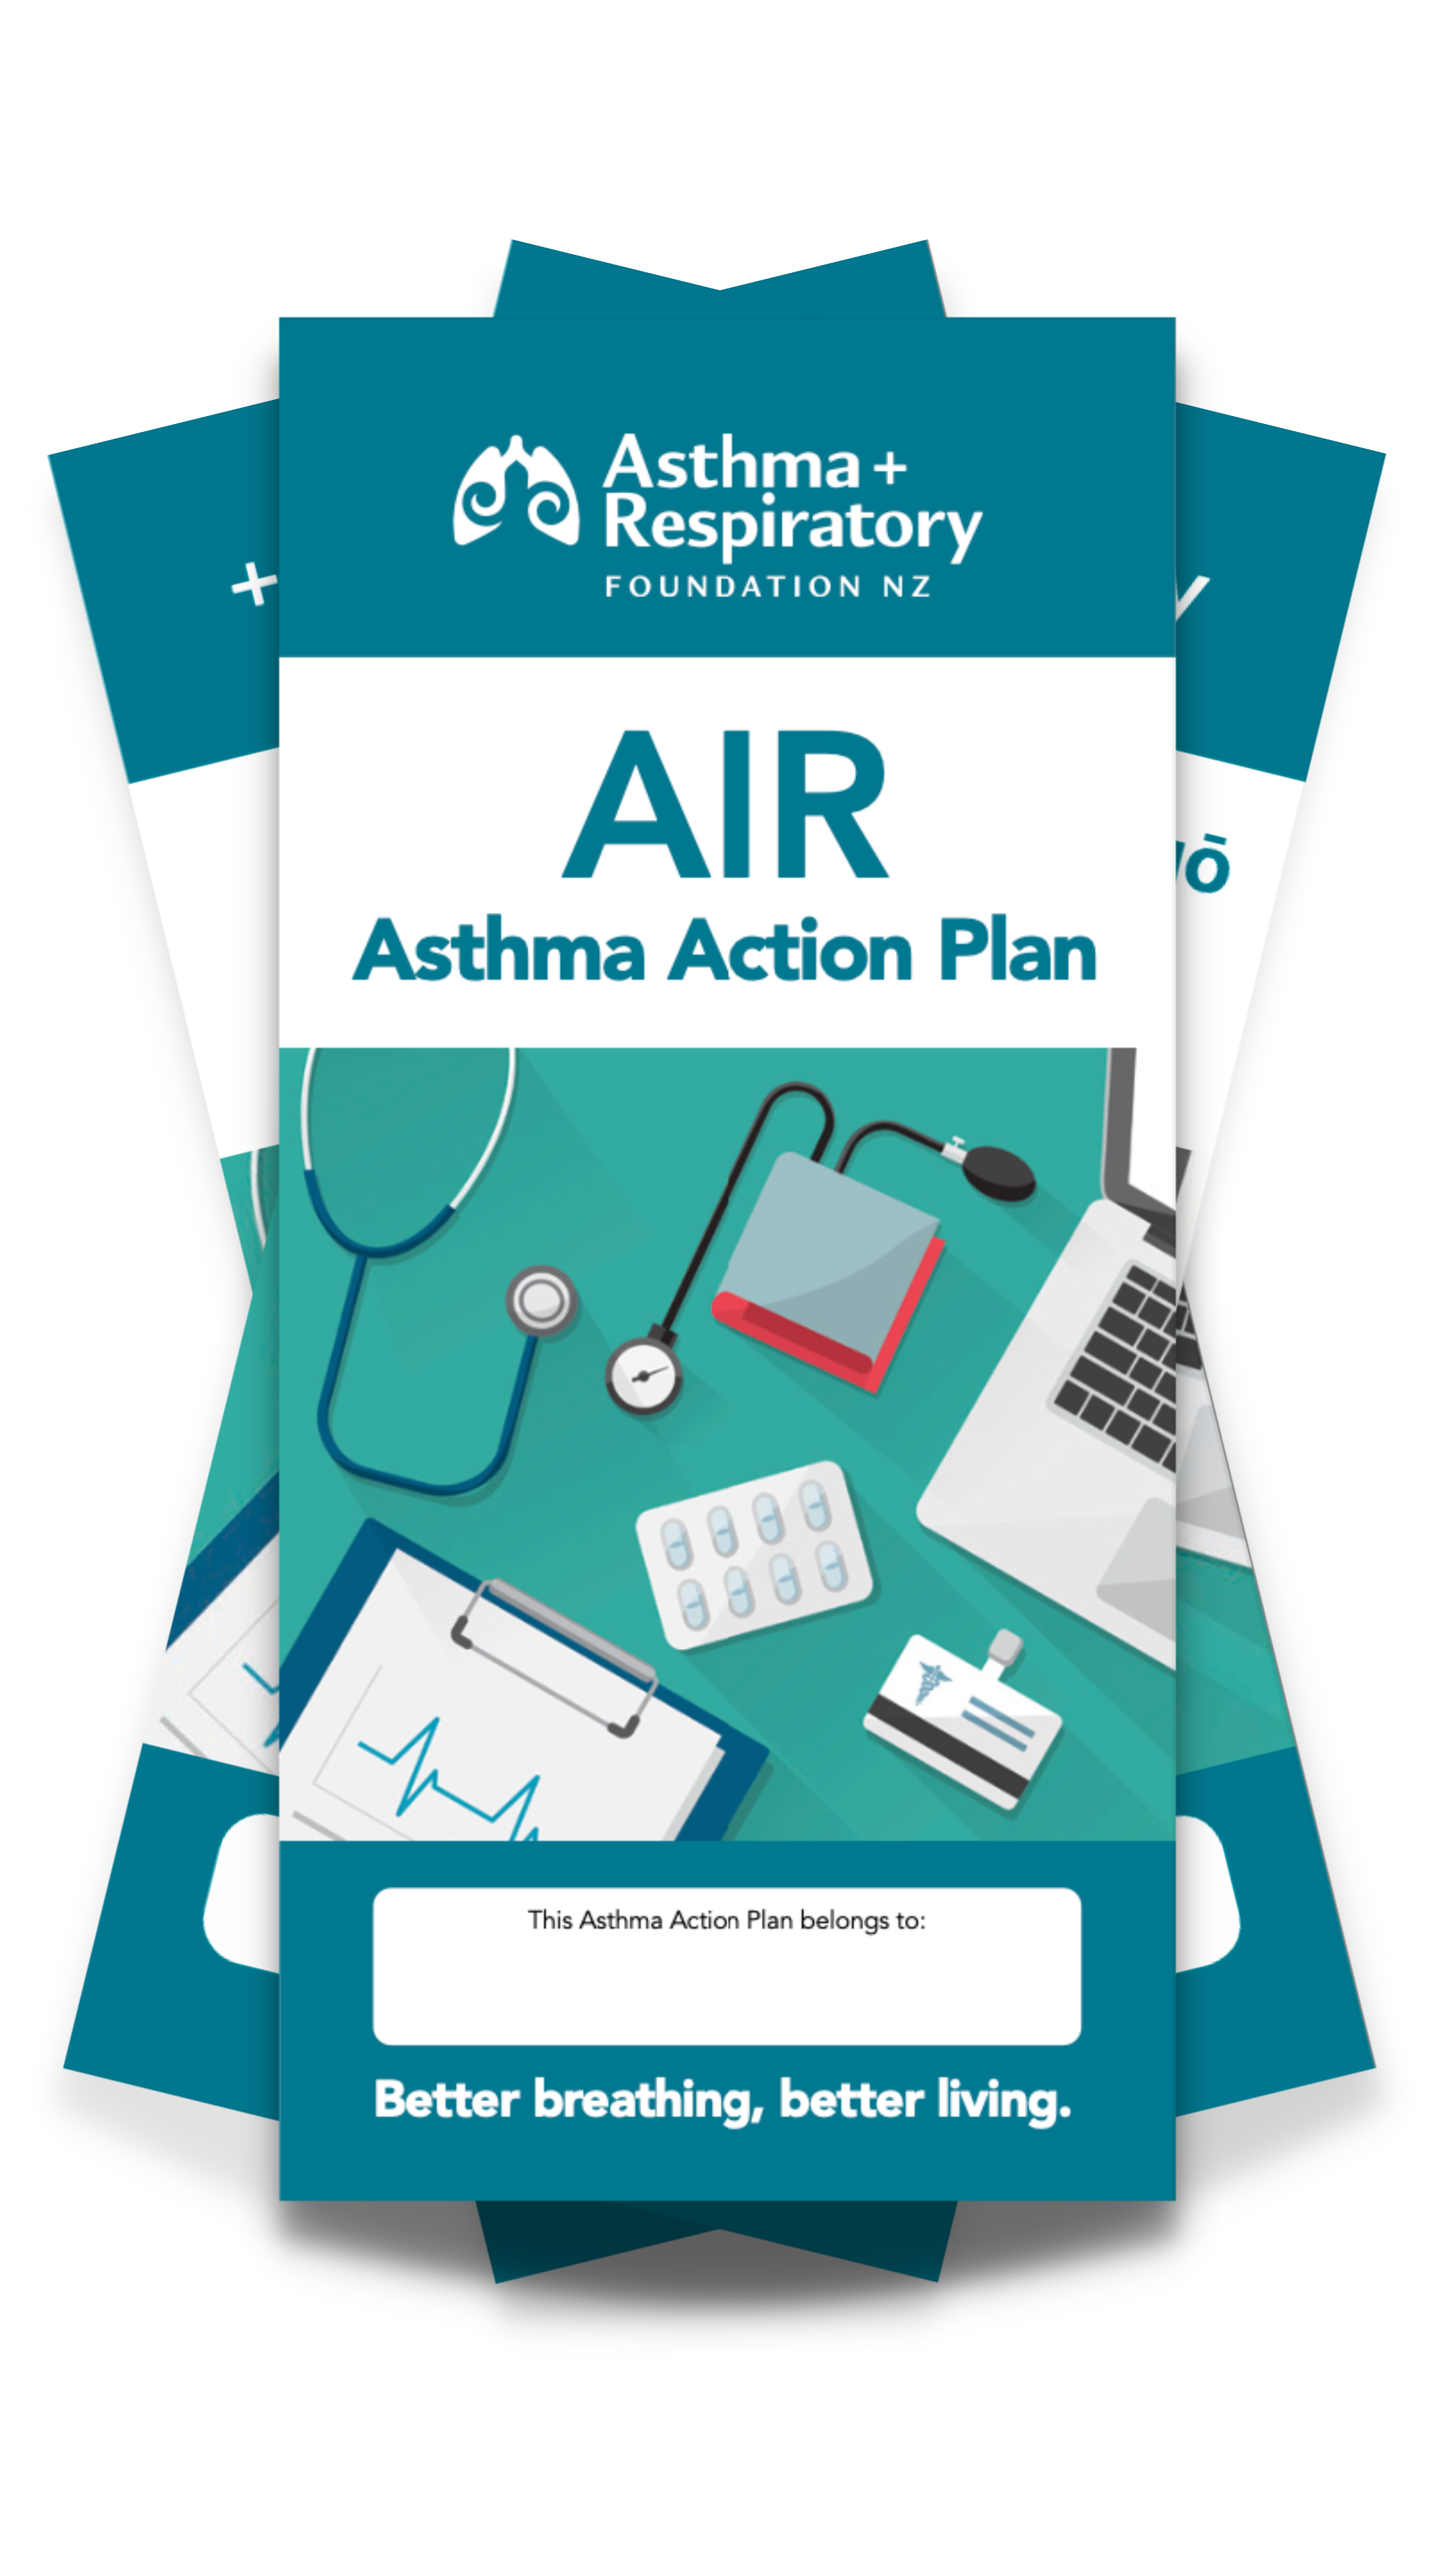 AIR Asthma Action Plan